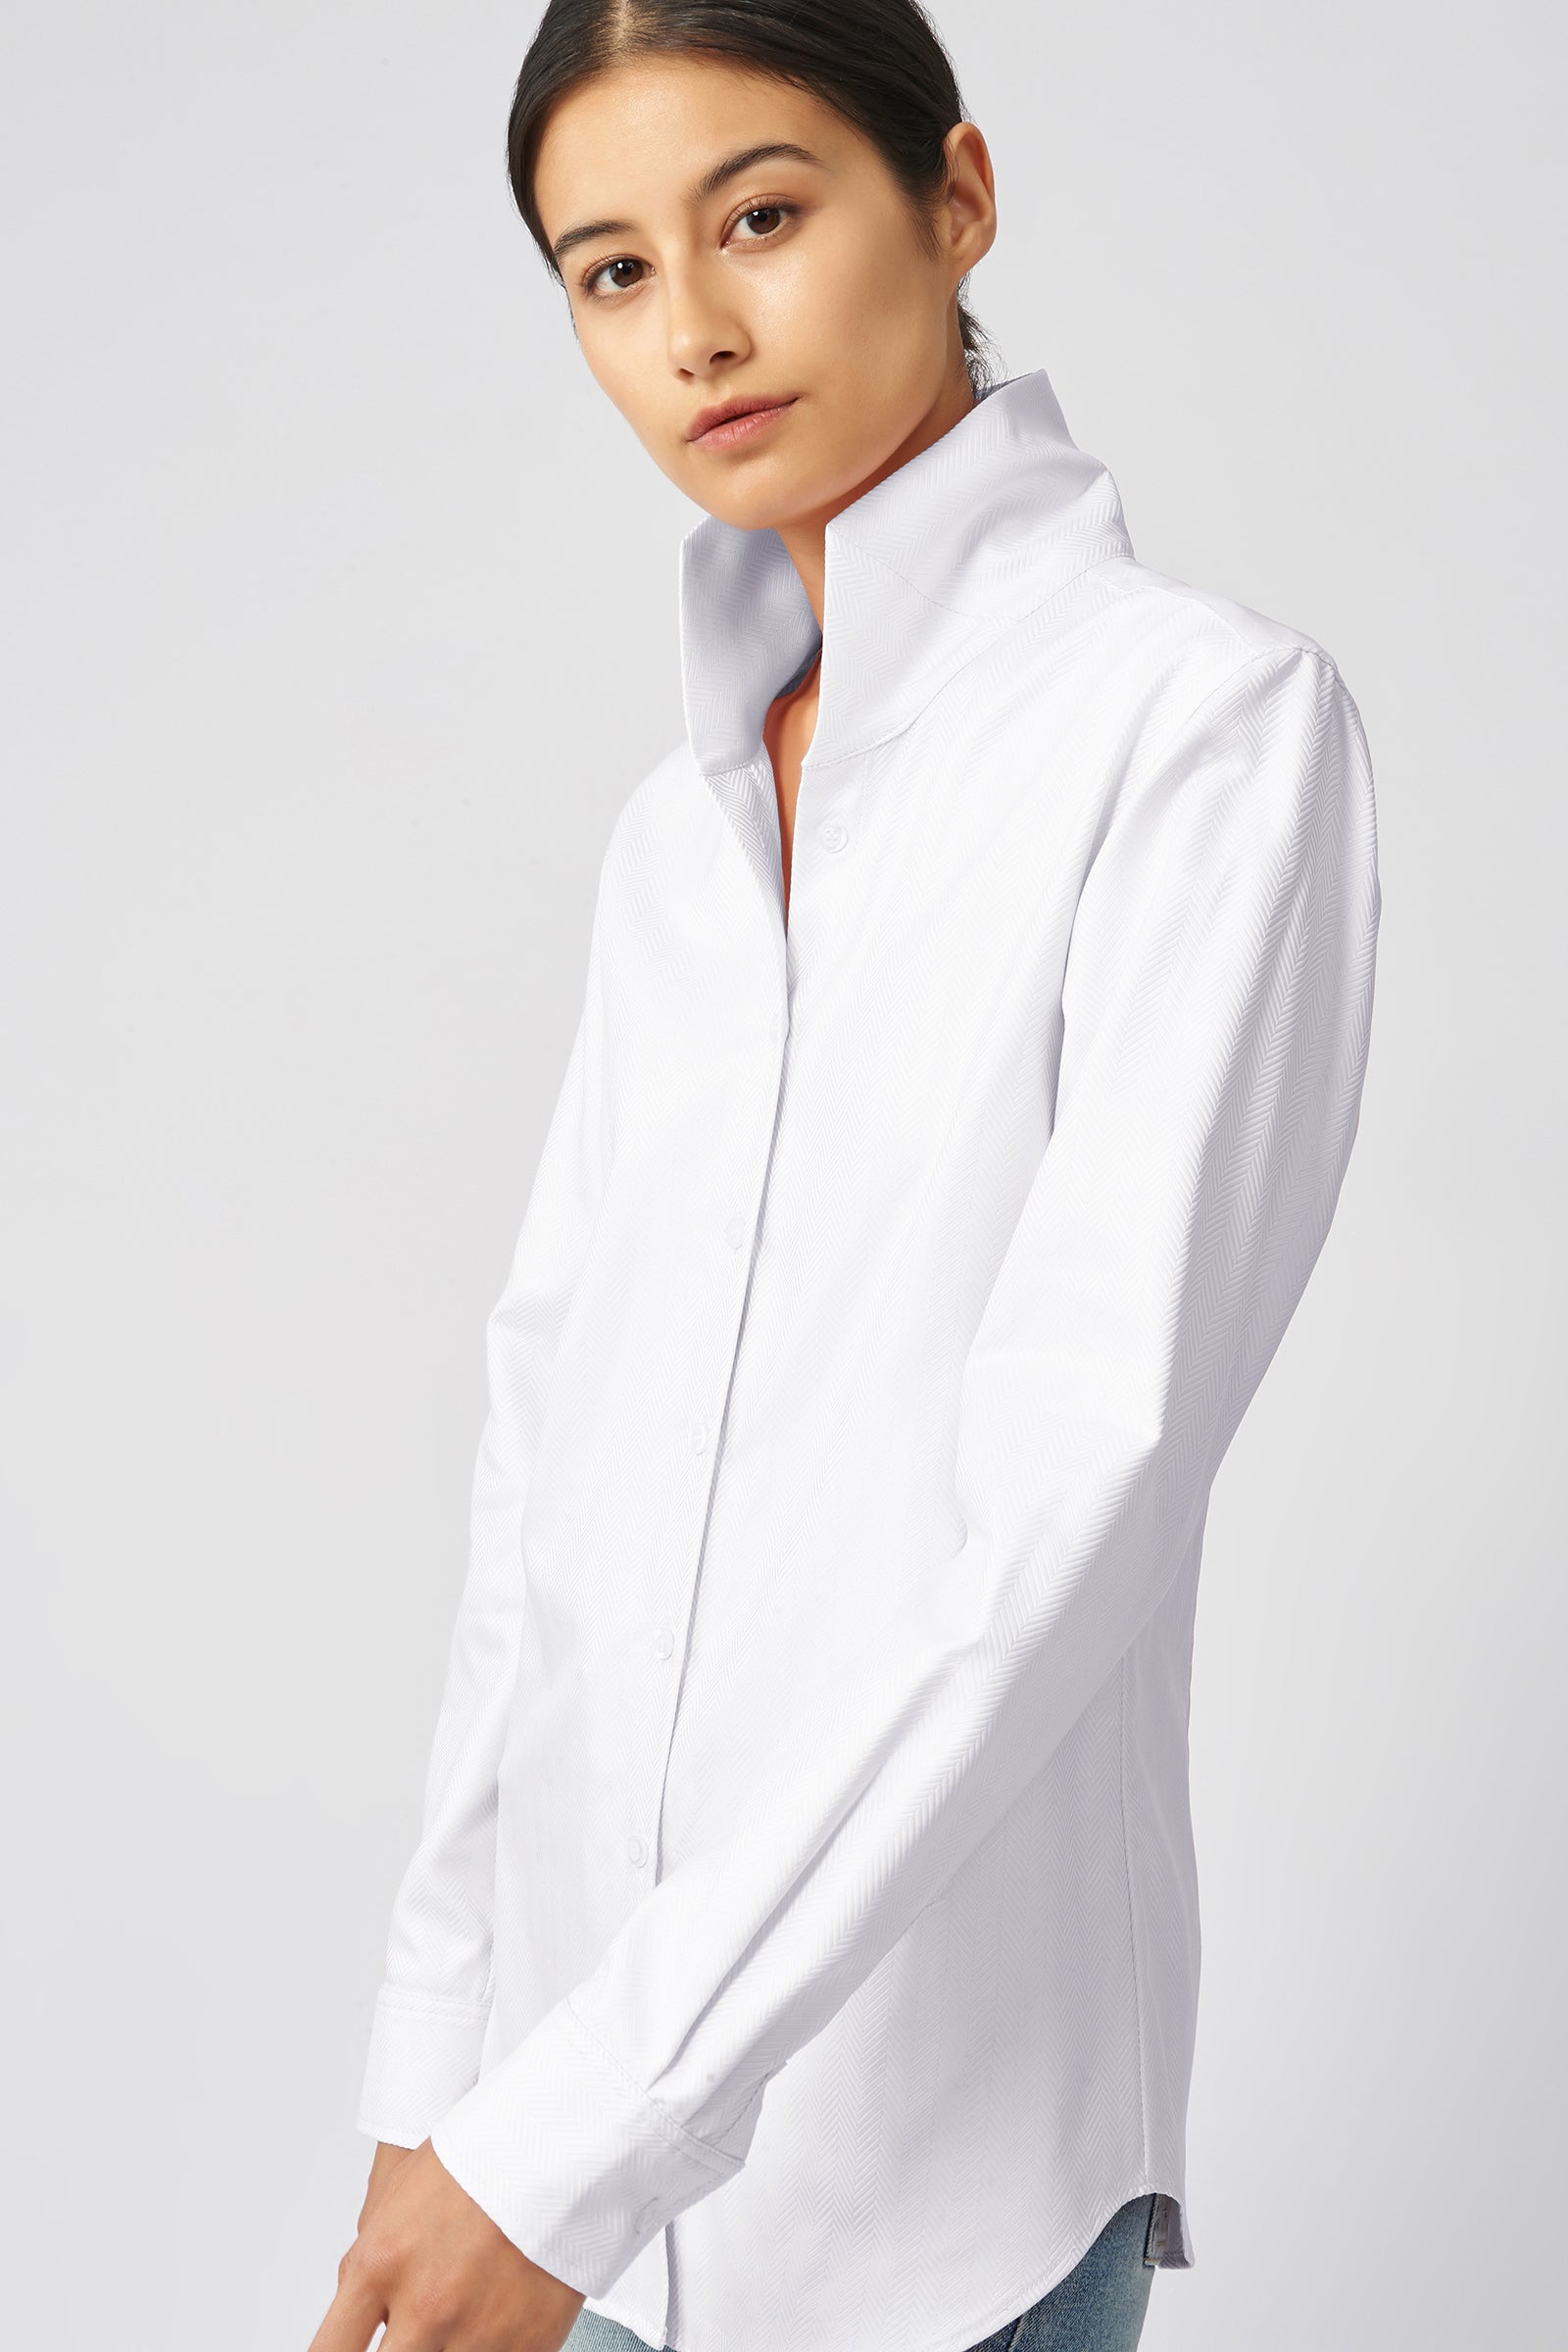 Kal Rieman Ginna Tailored Shirt in White Herringbone on Model Front Side View